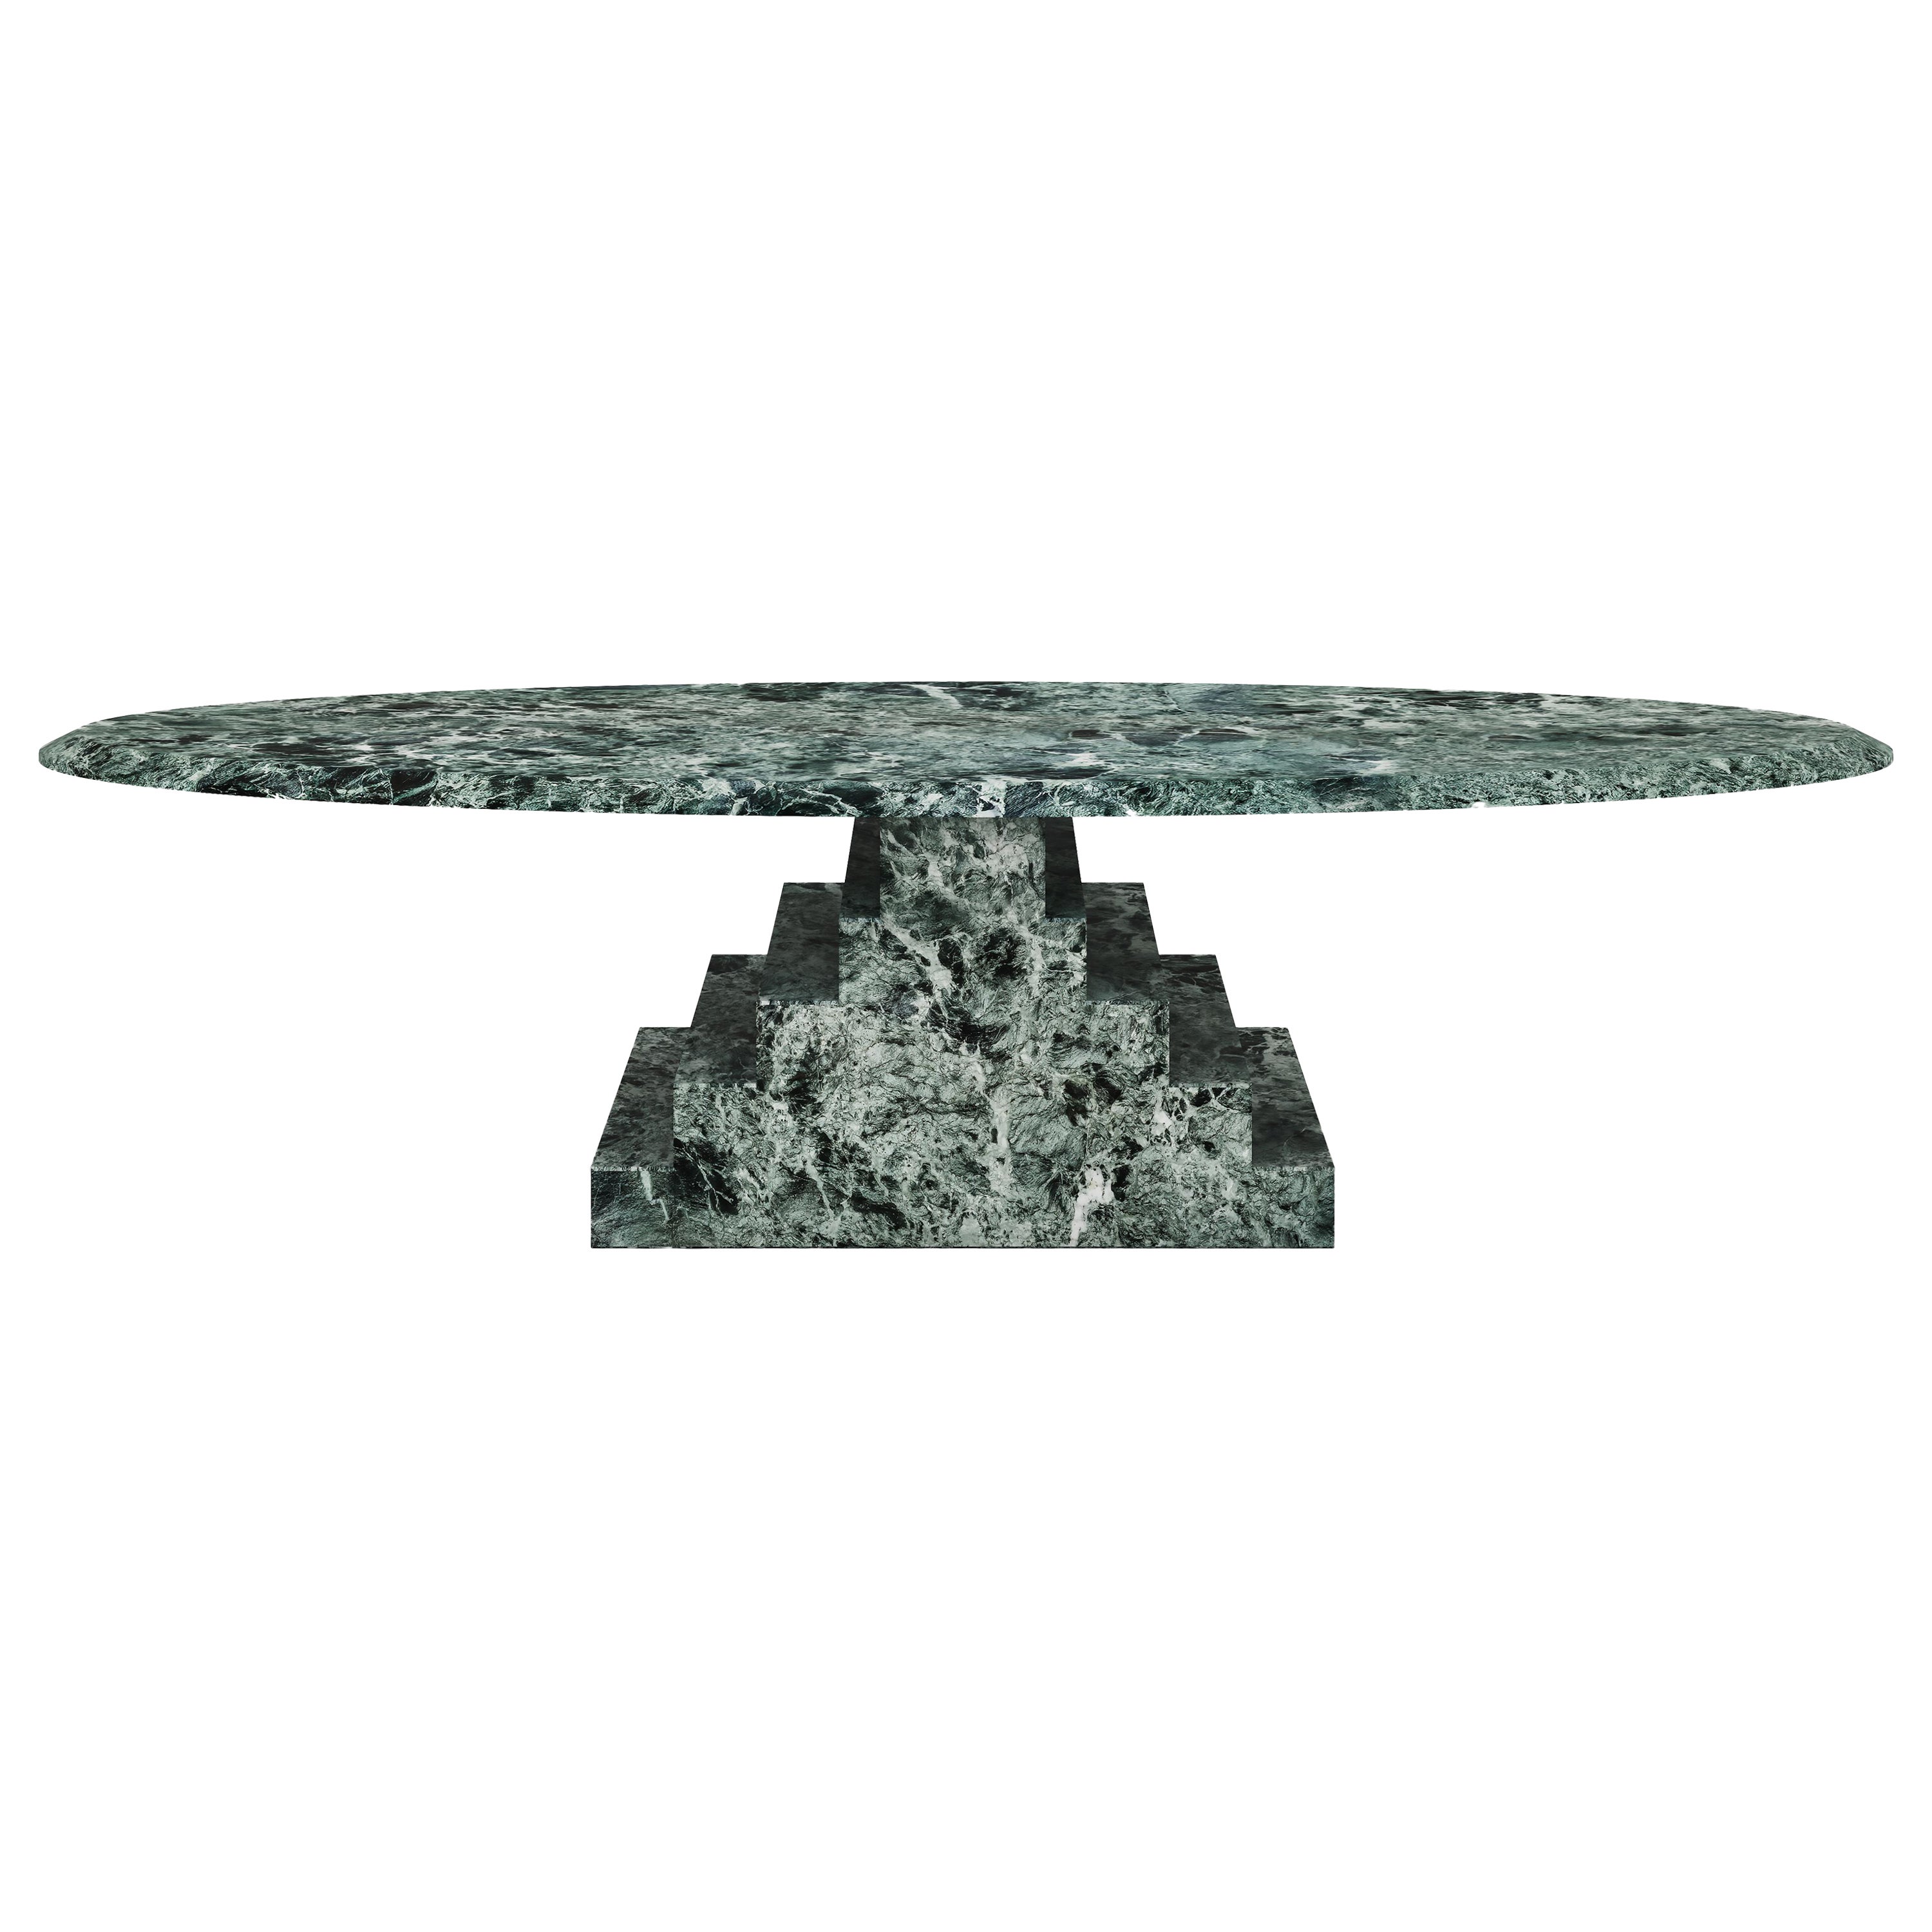 NORDST NIKO Coffee Table, Italian Green Marble, Danish Modern Design , New